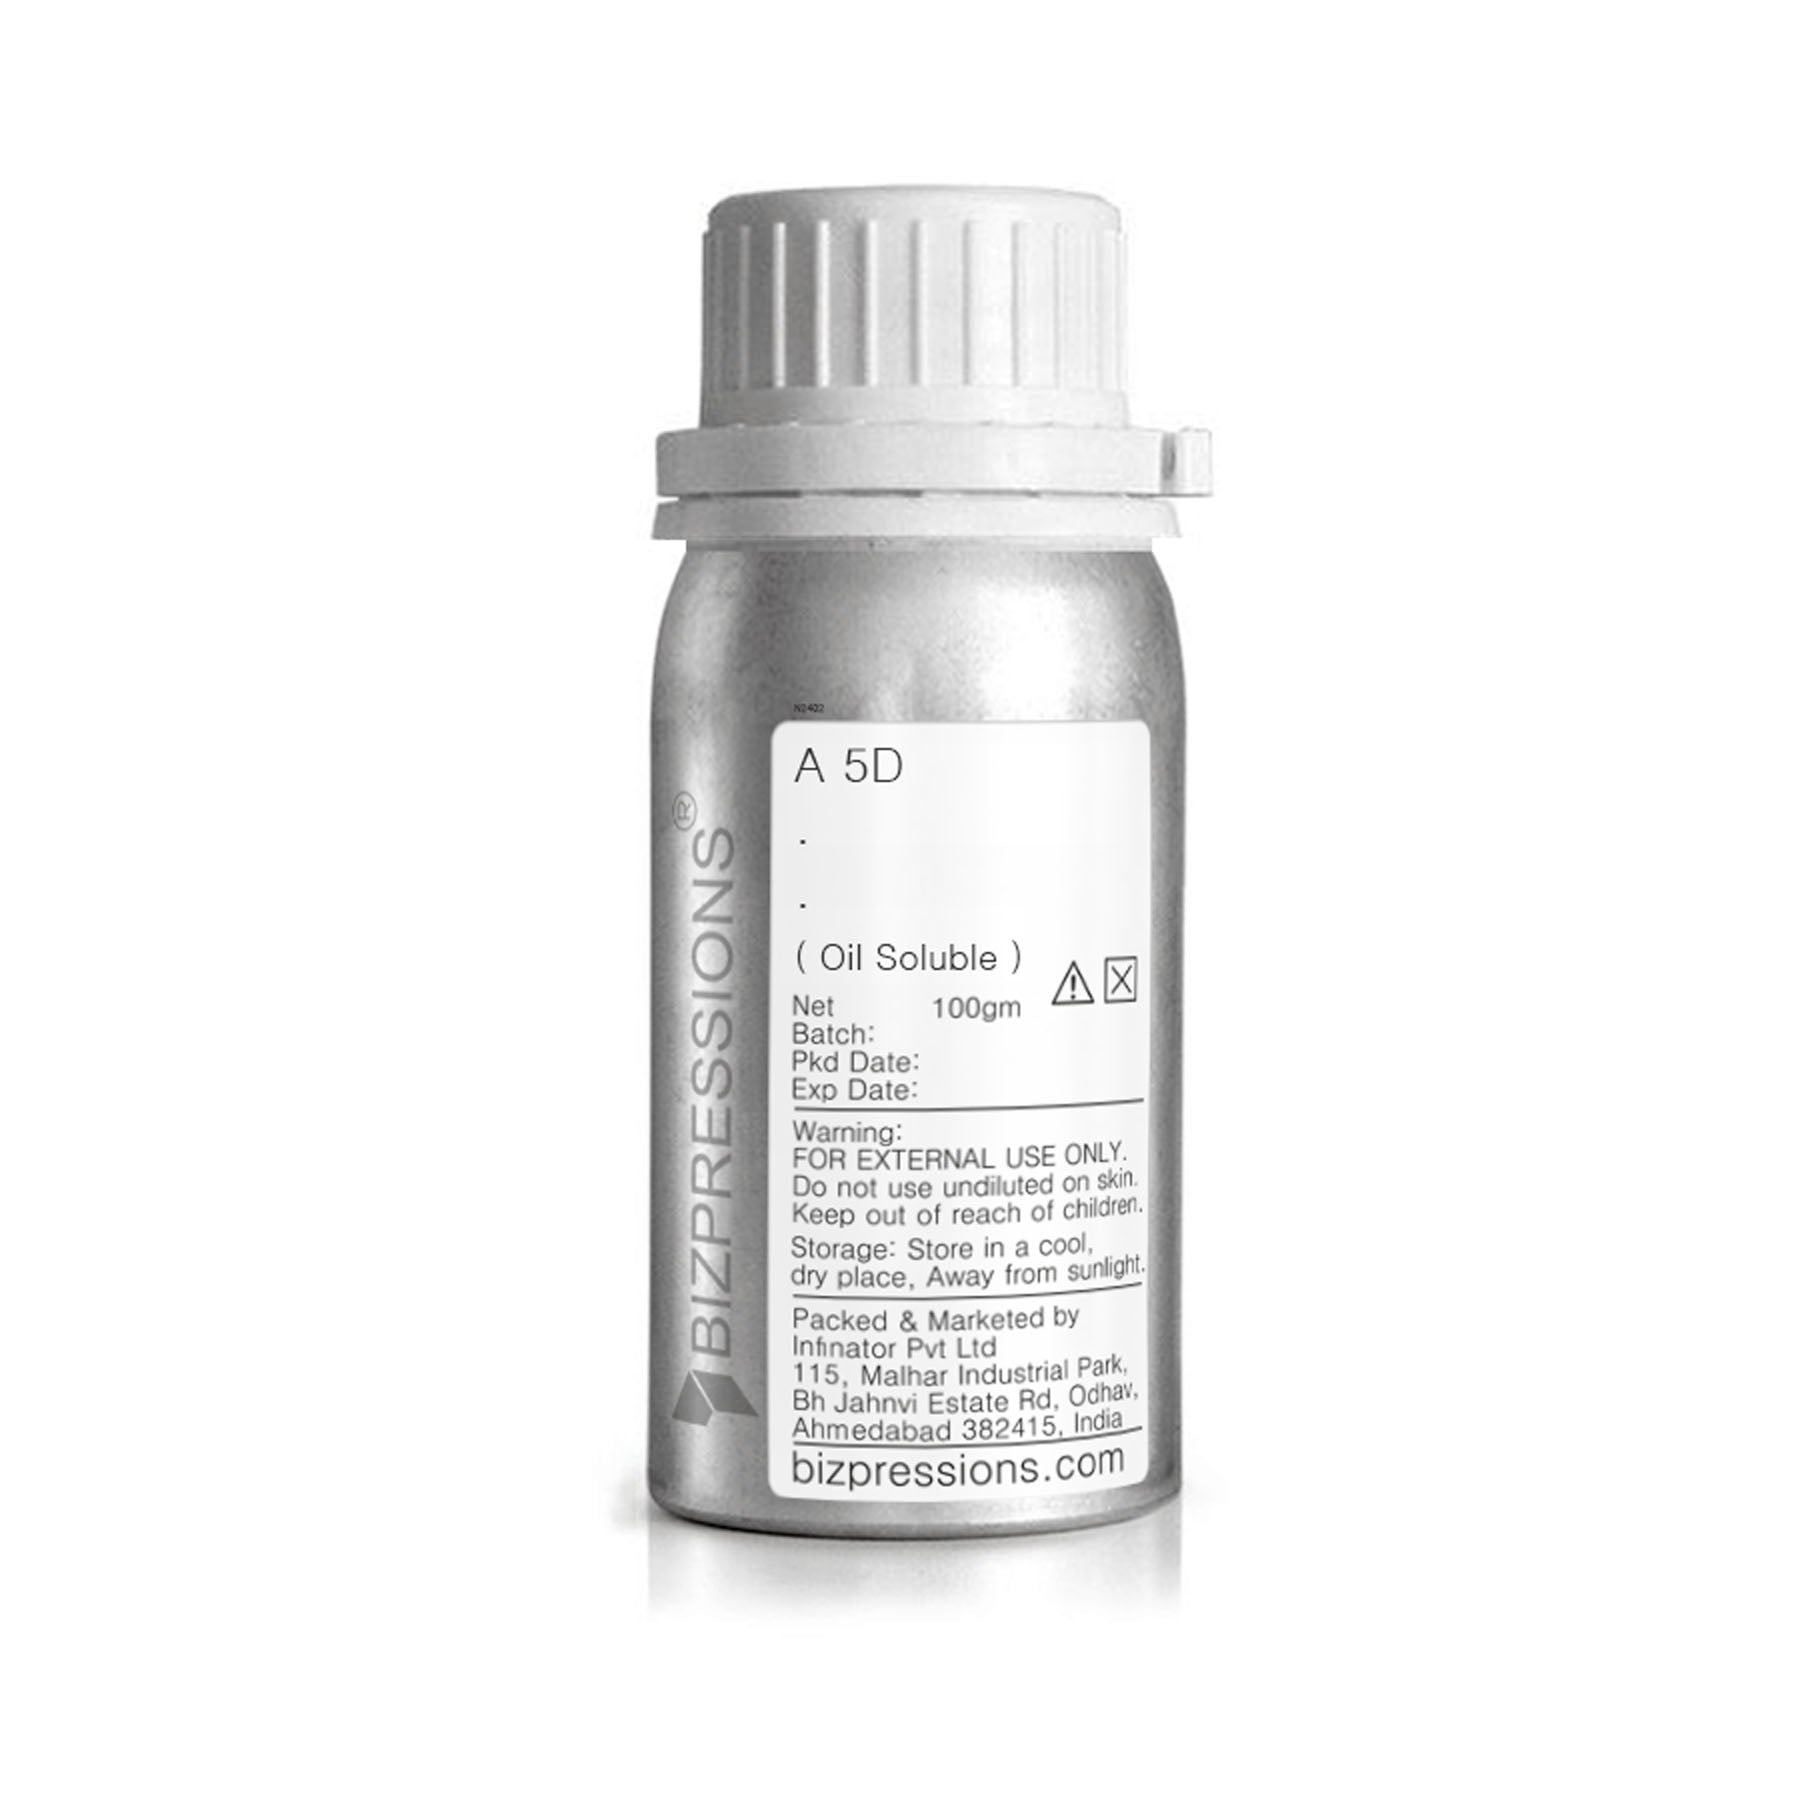 A 5D - Fragrance ( Oil Soluble ) - 100 gm